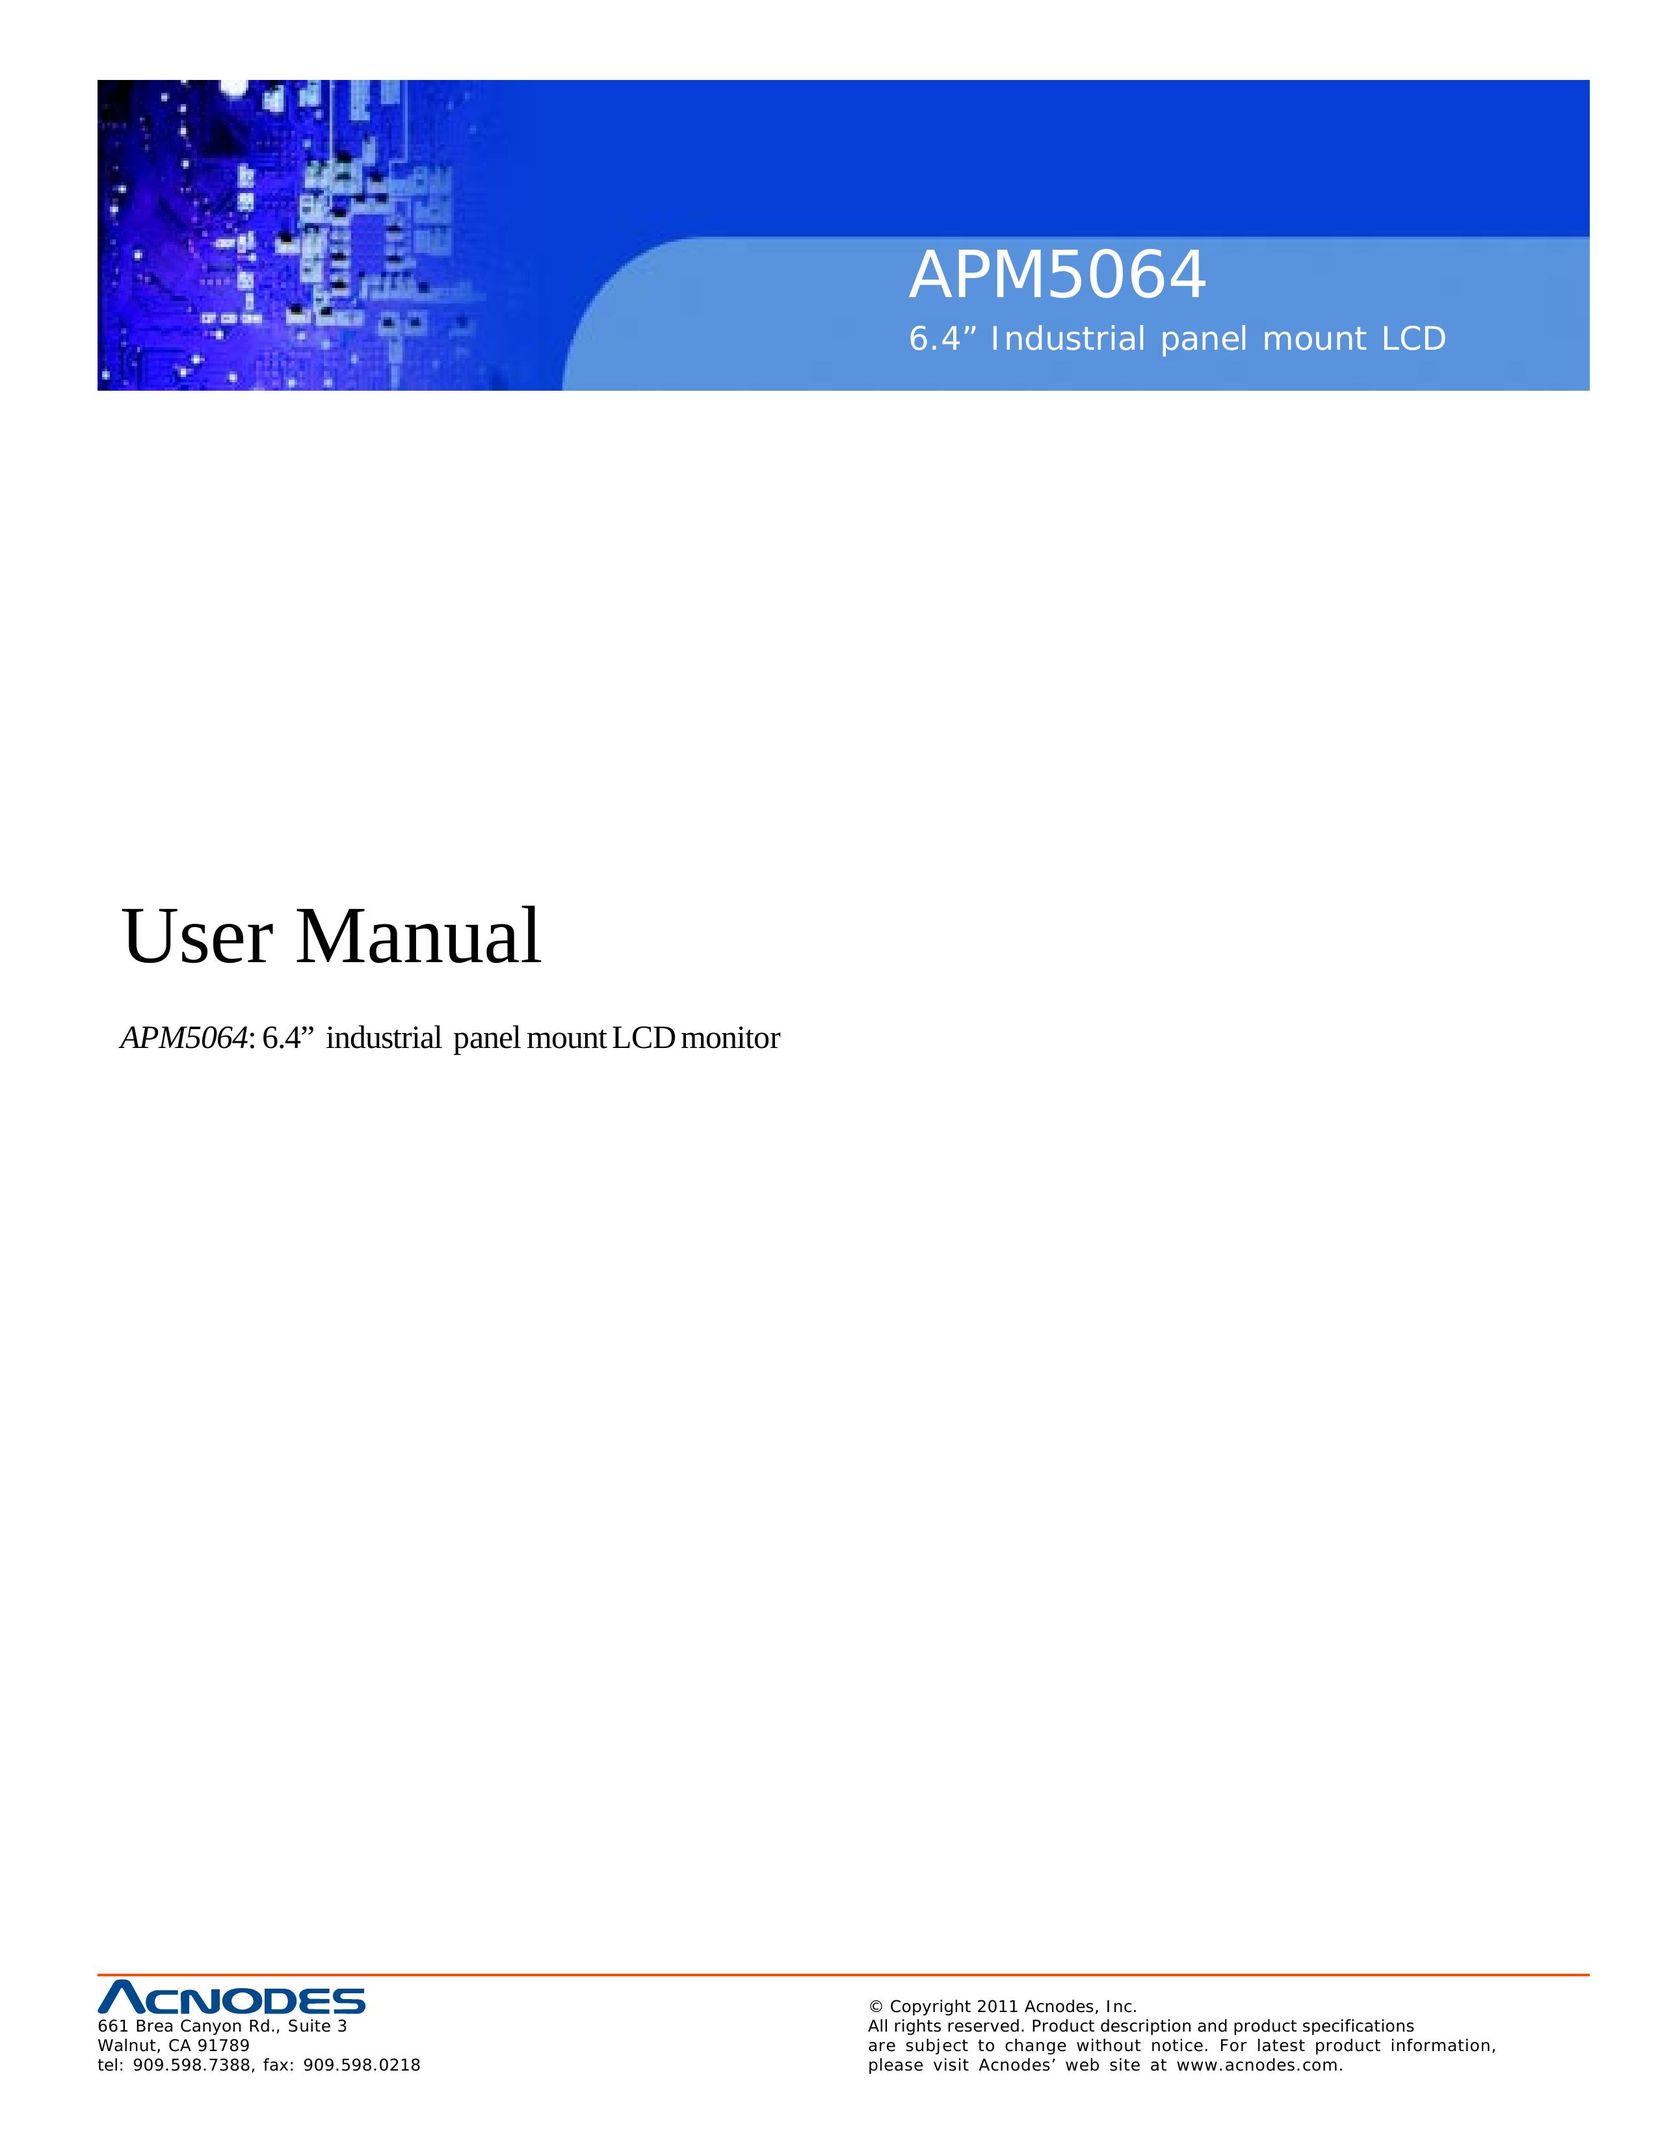 Acnodes APM5064 Car Video System User Manual